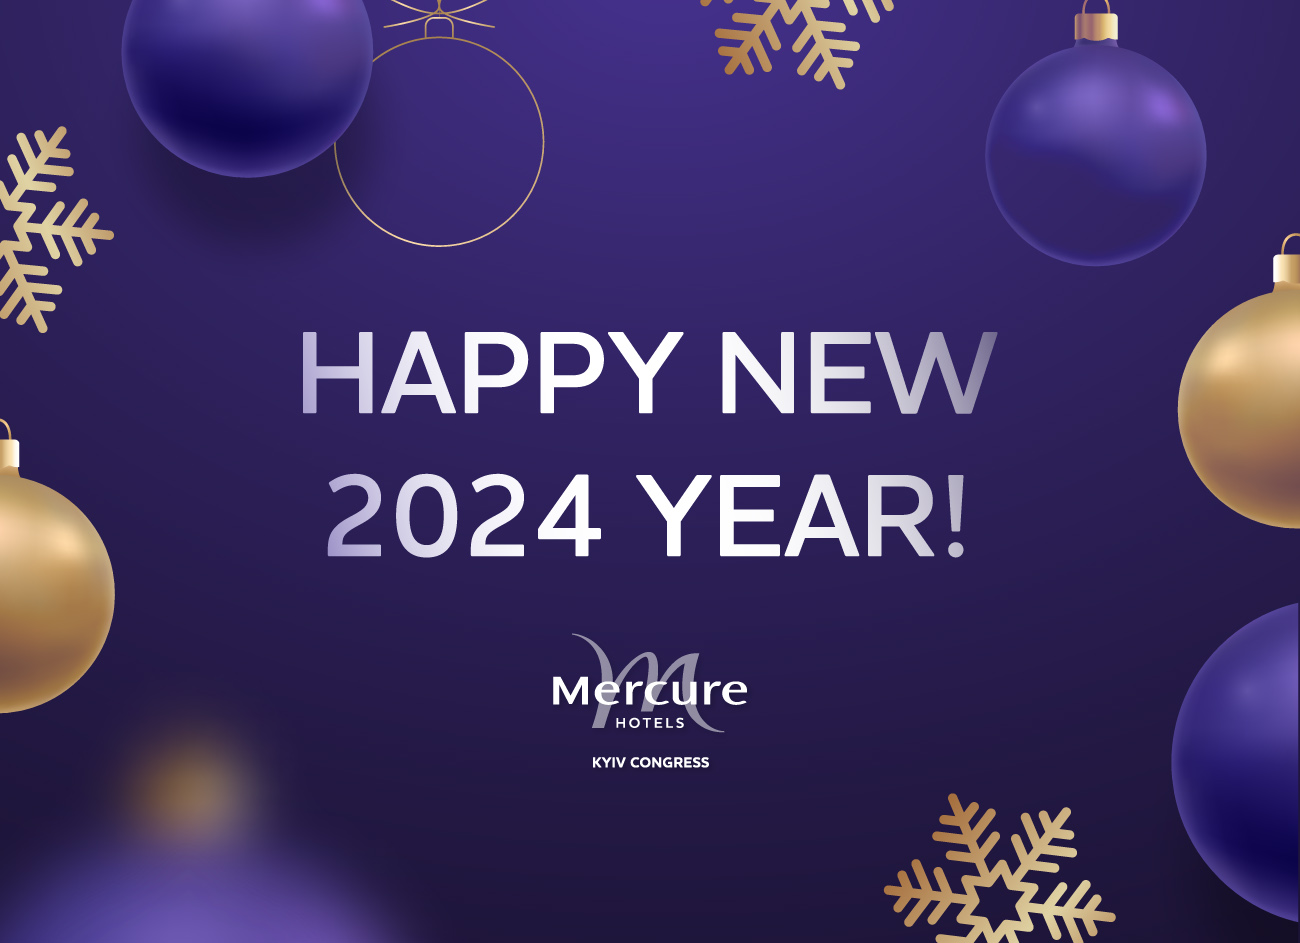 Happy New 2024 Year!